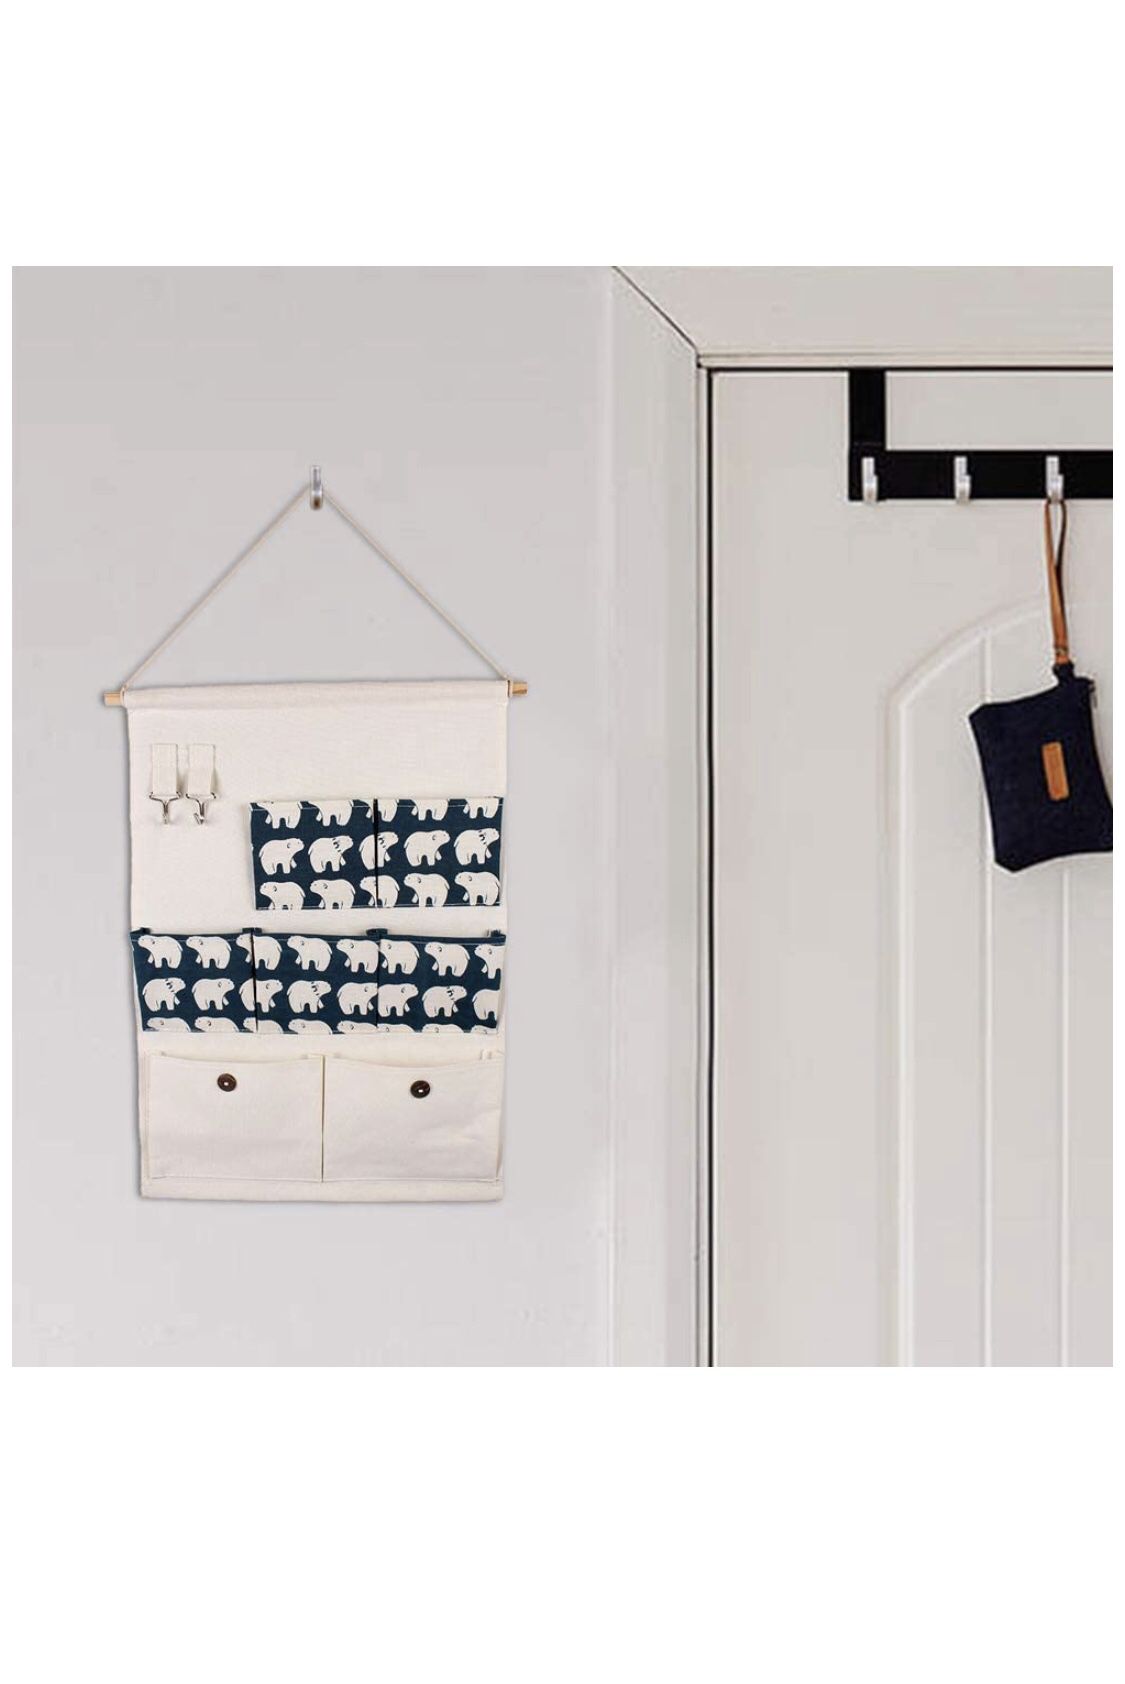 Wall Hanging Organizer,Over Door/Wall Mount Hanging Storage Shelves with 7 Pockets,Waterproof Sundry Hanging Bag for Room Bathroom Bedroom Restaurant(